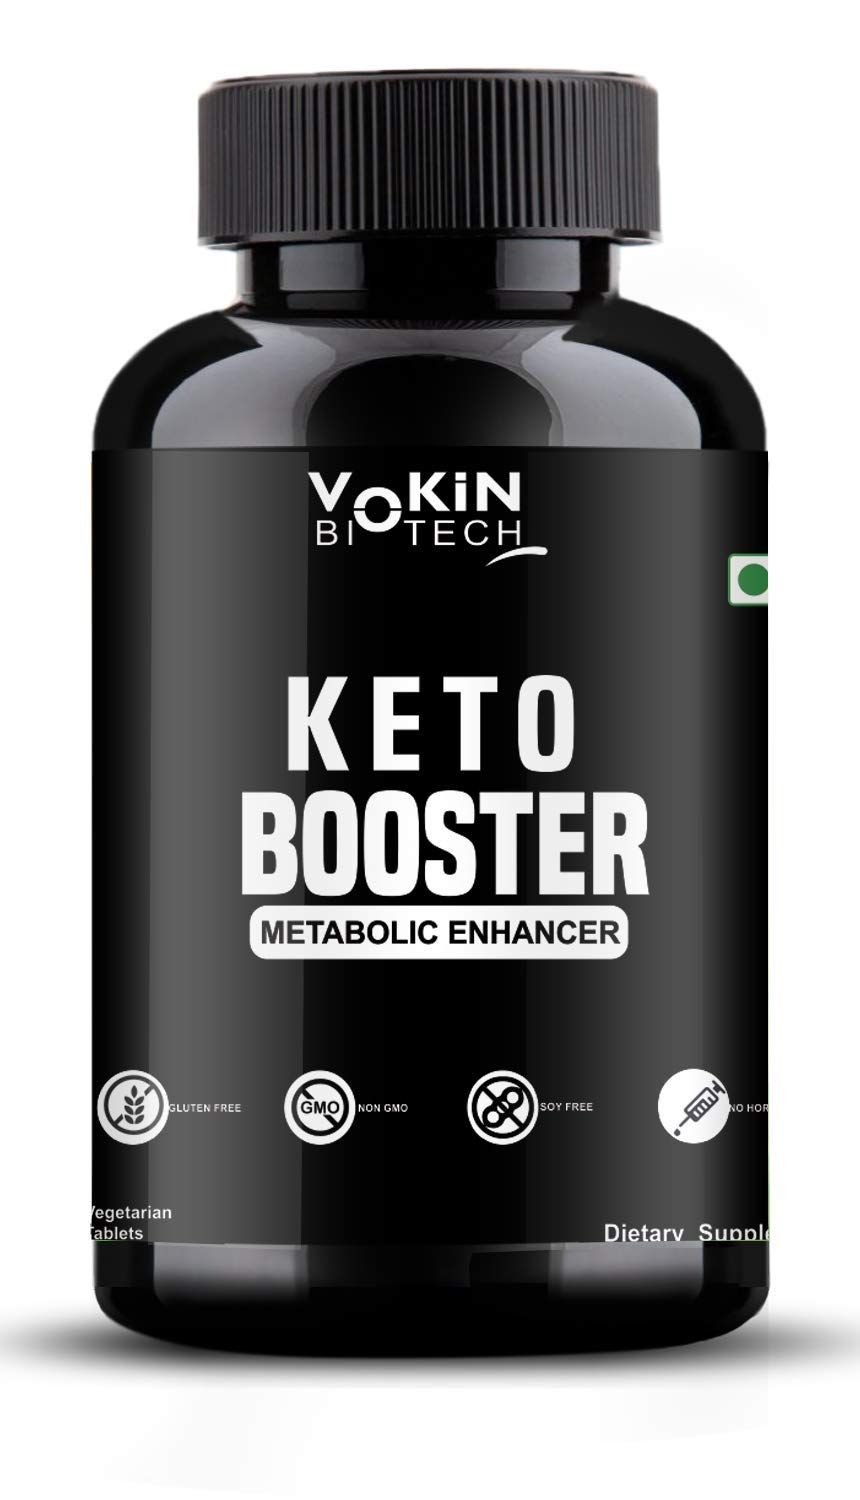 Vokin Biotech Keto Booster Image